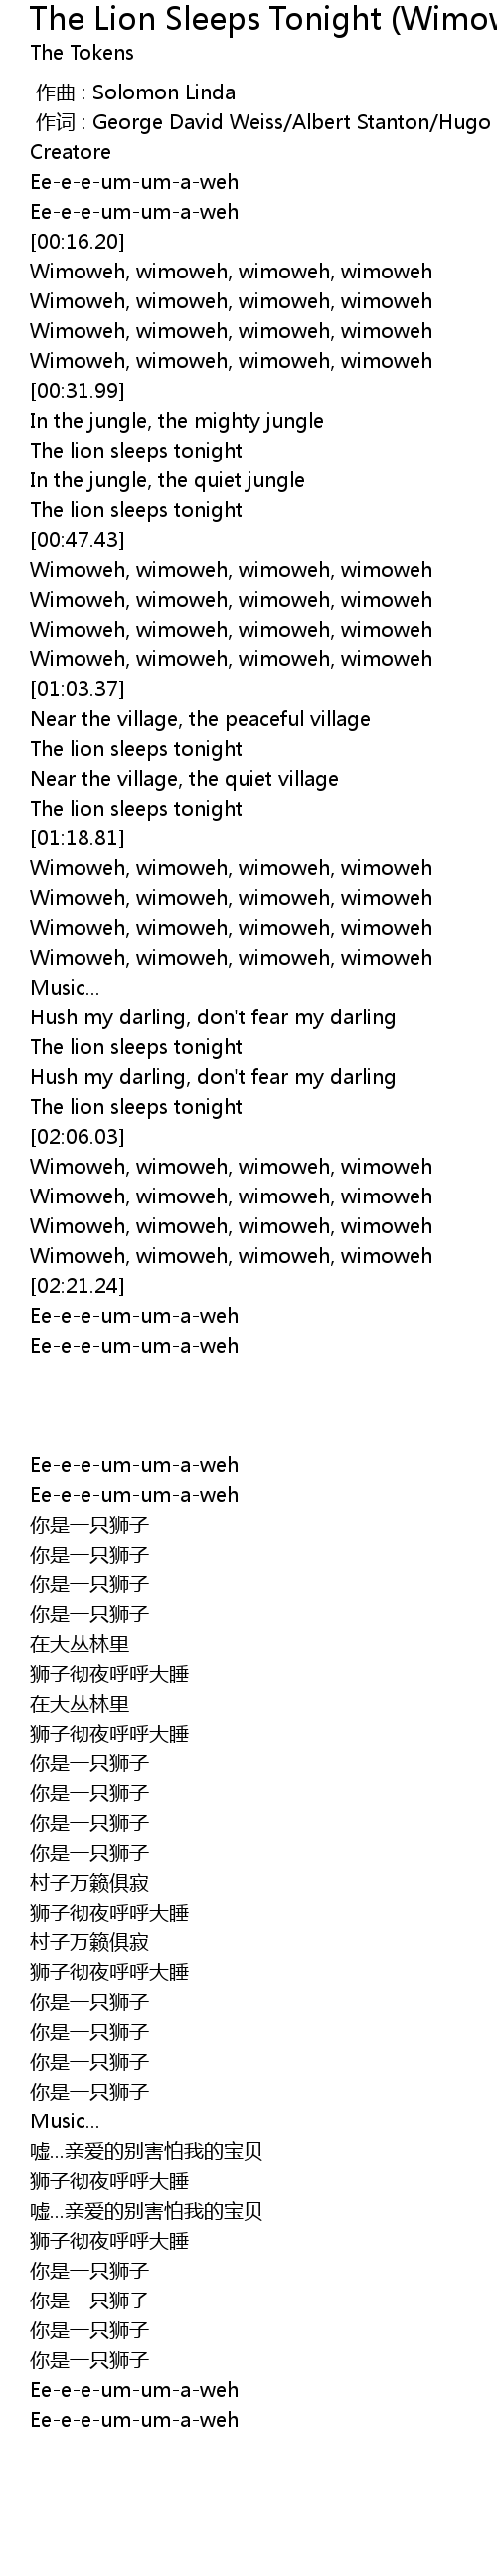 The Lion Sleeps Tonight Wimoweh Lyrics Follow Lyrics